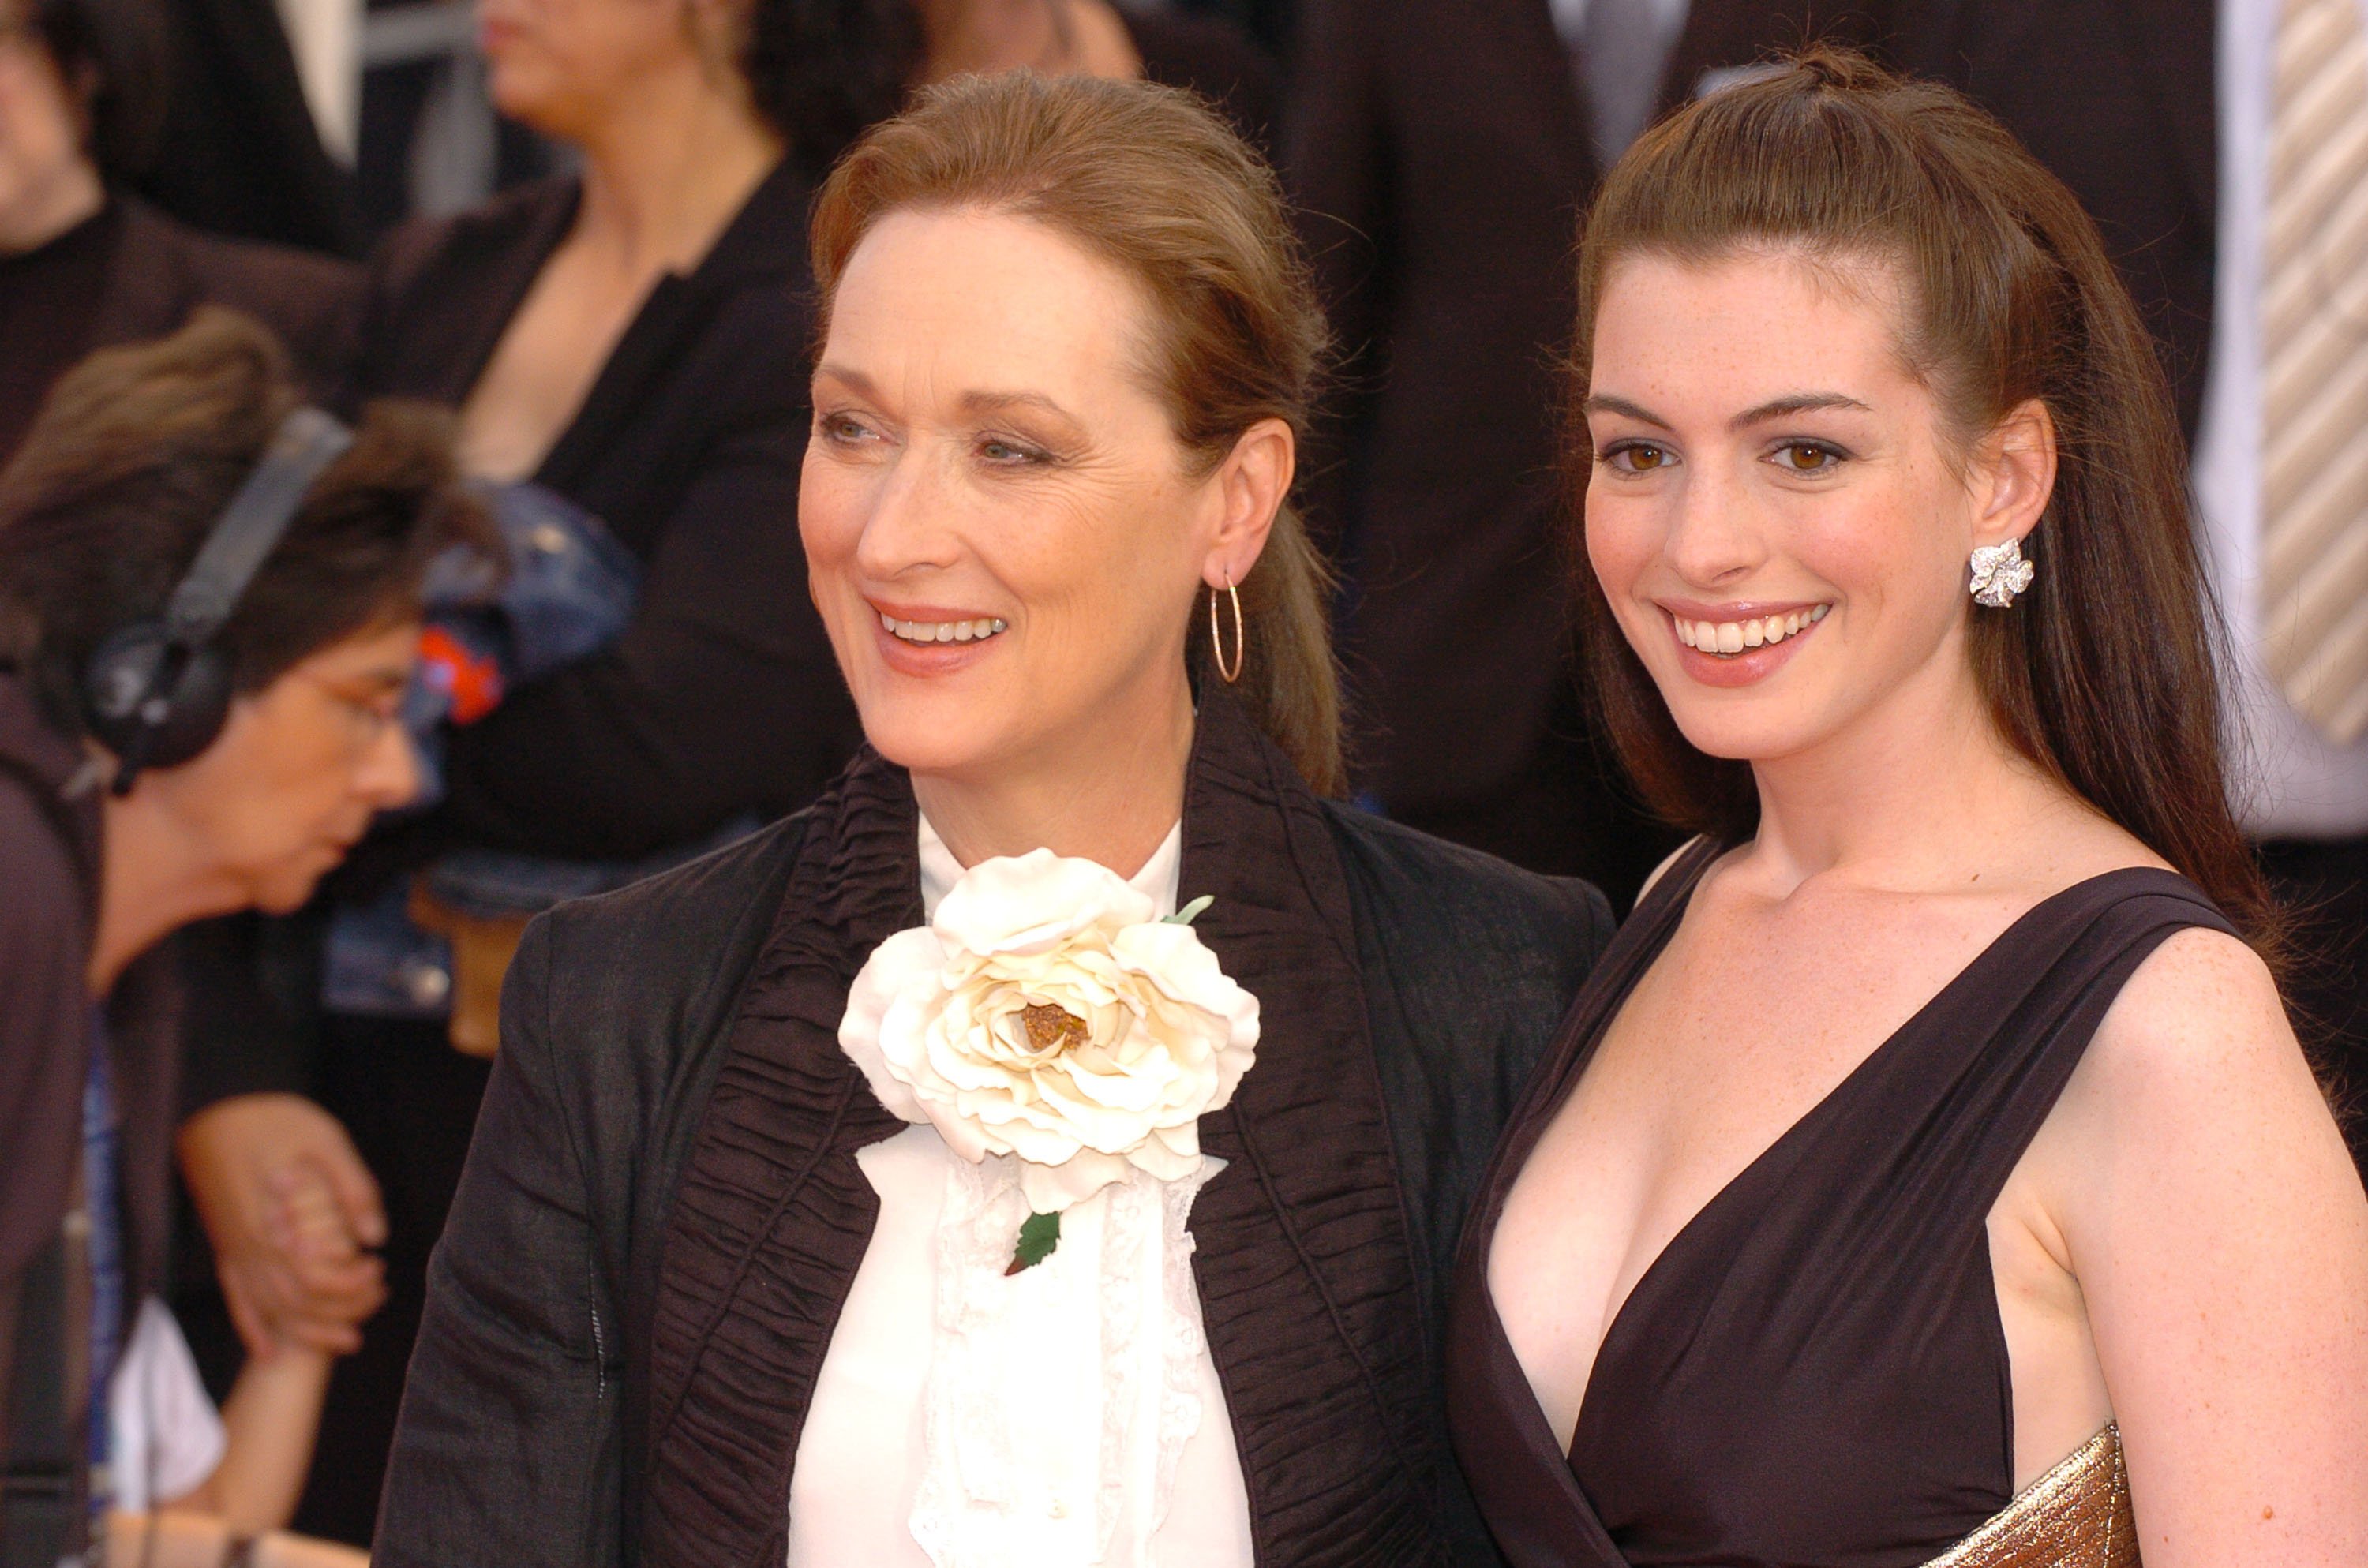 'The Devil Wears Prada' stars Anne Hathaway and Meryl Streep smiling at the film's premiere.